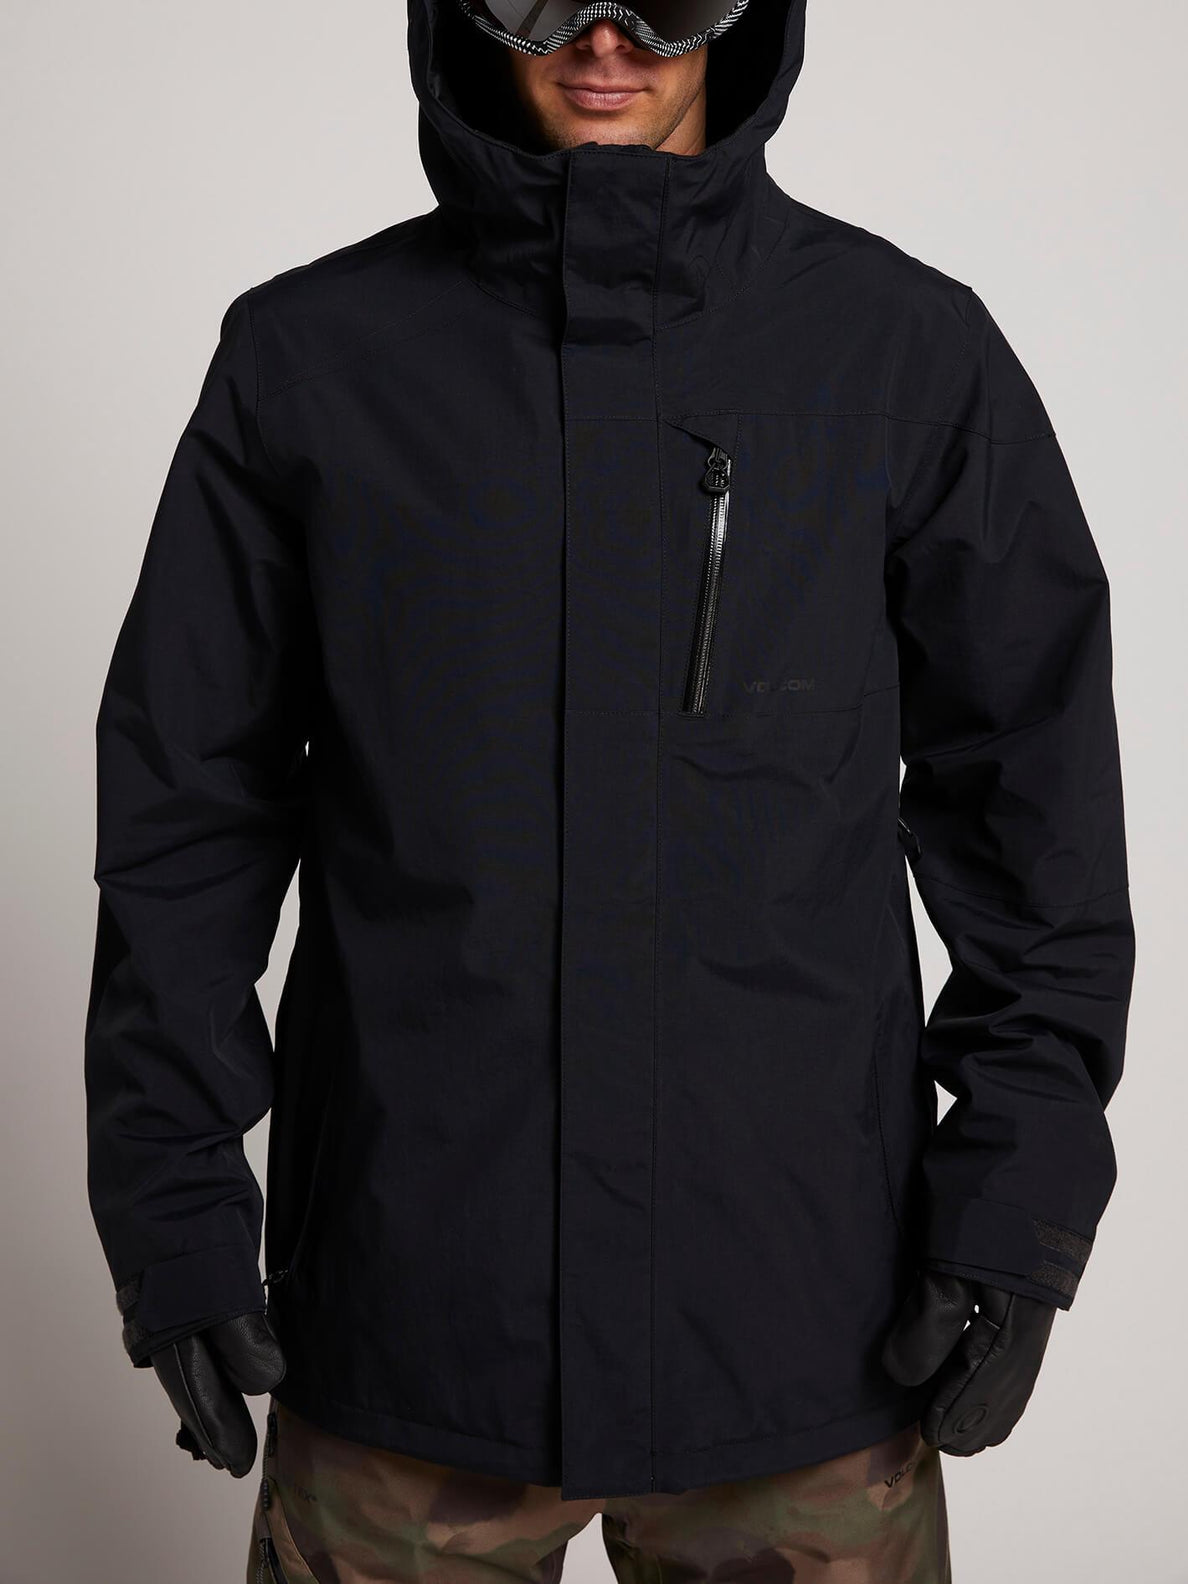 L Gore Tex Jacket Men S Waterproof Snow Jacket Volcom Volcom United Kingdom